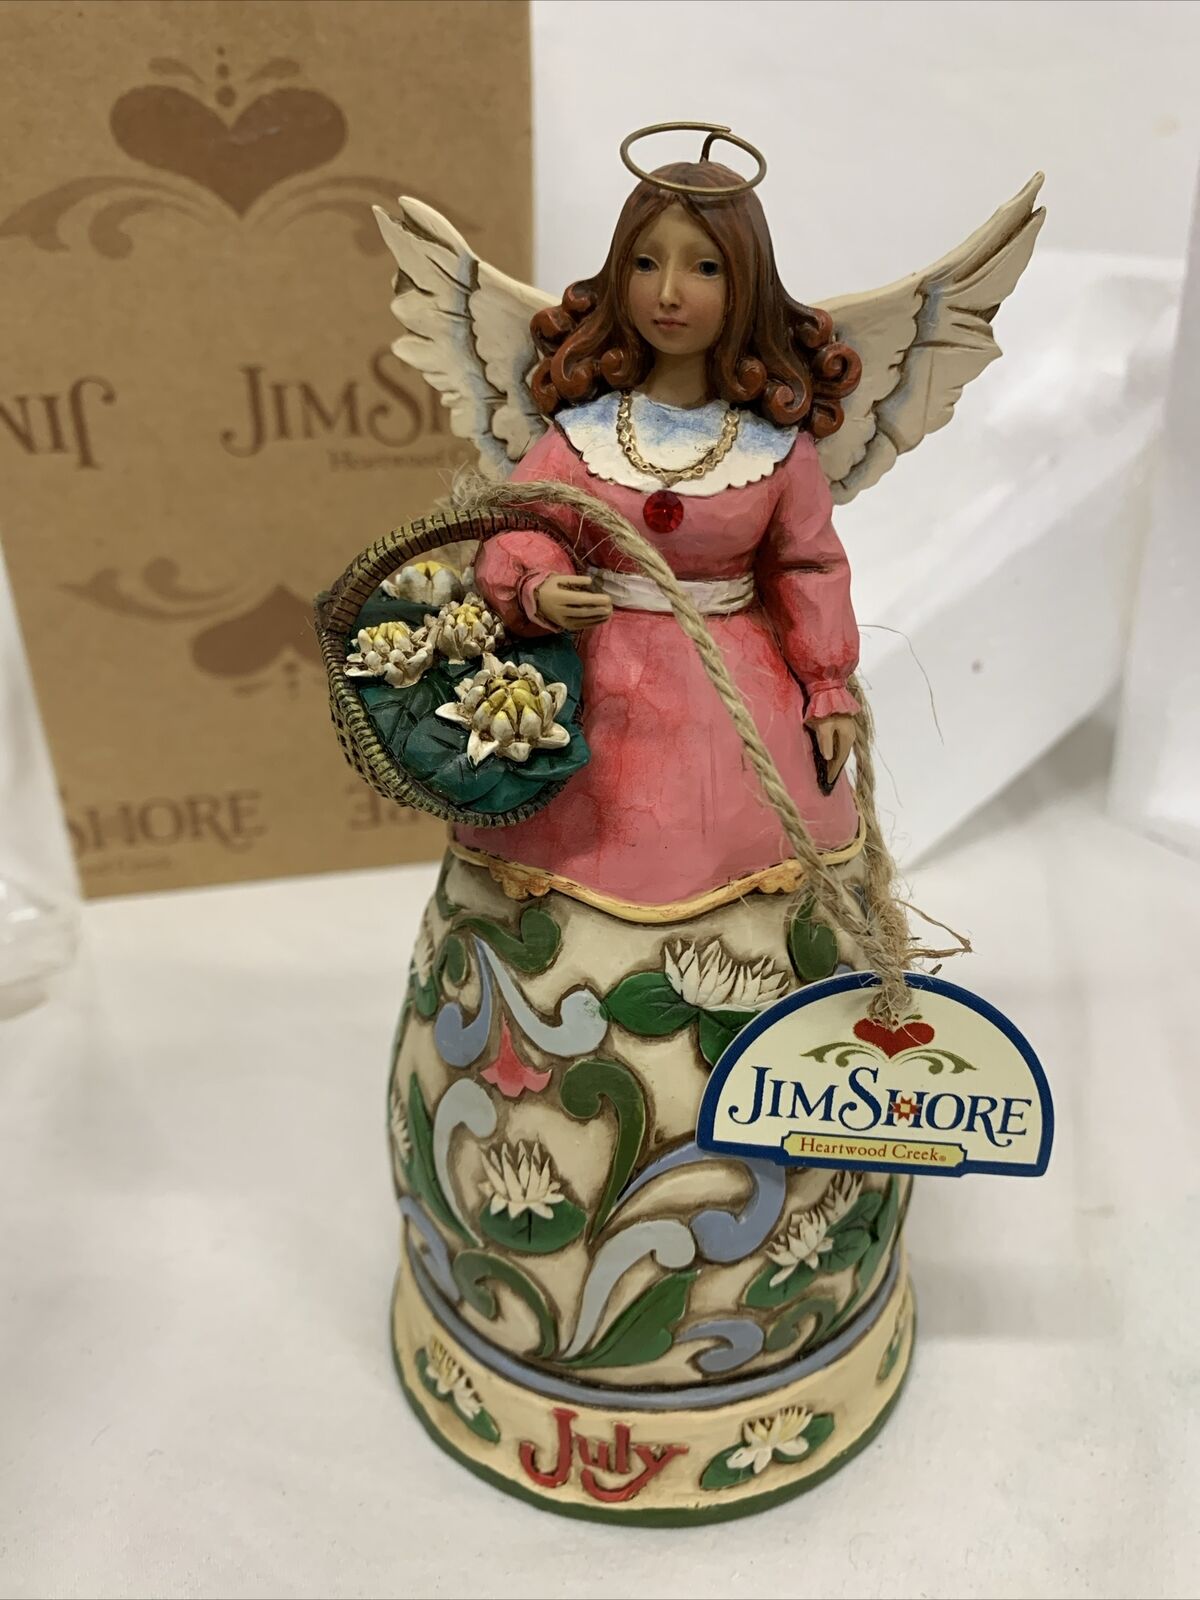 Jim Shore Heartwood Creek “July Angel” Figurine 4012556 Ruby, Water Lily 2008